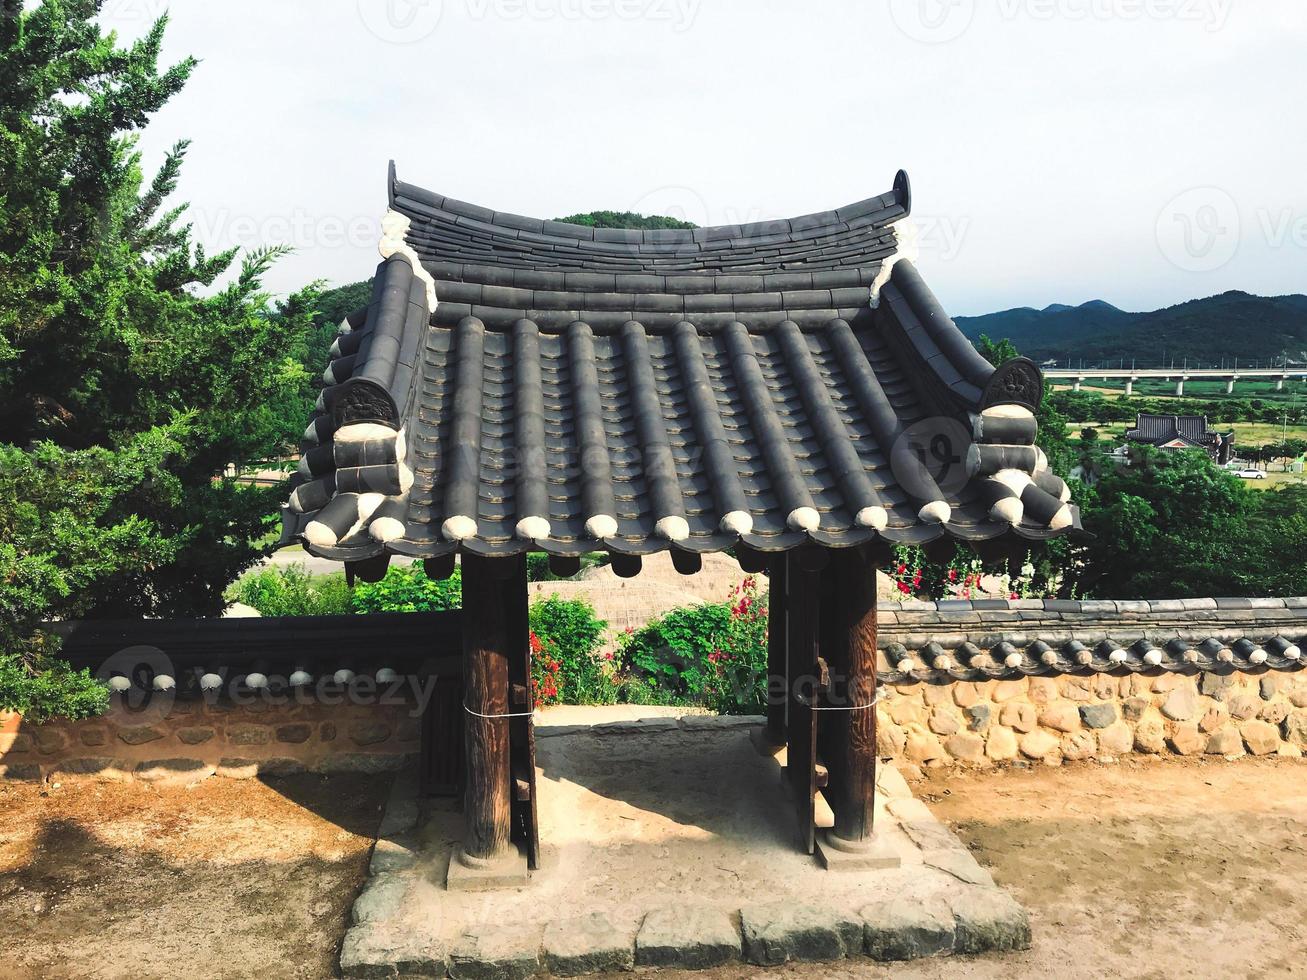 mooie traditionele boog in naksansa-tempel, zuid-korea foto